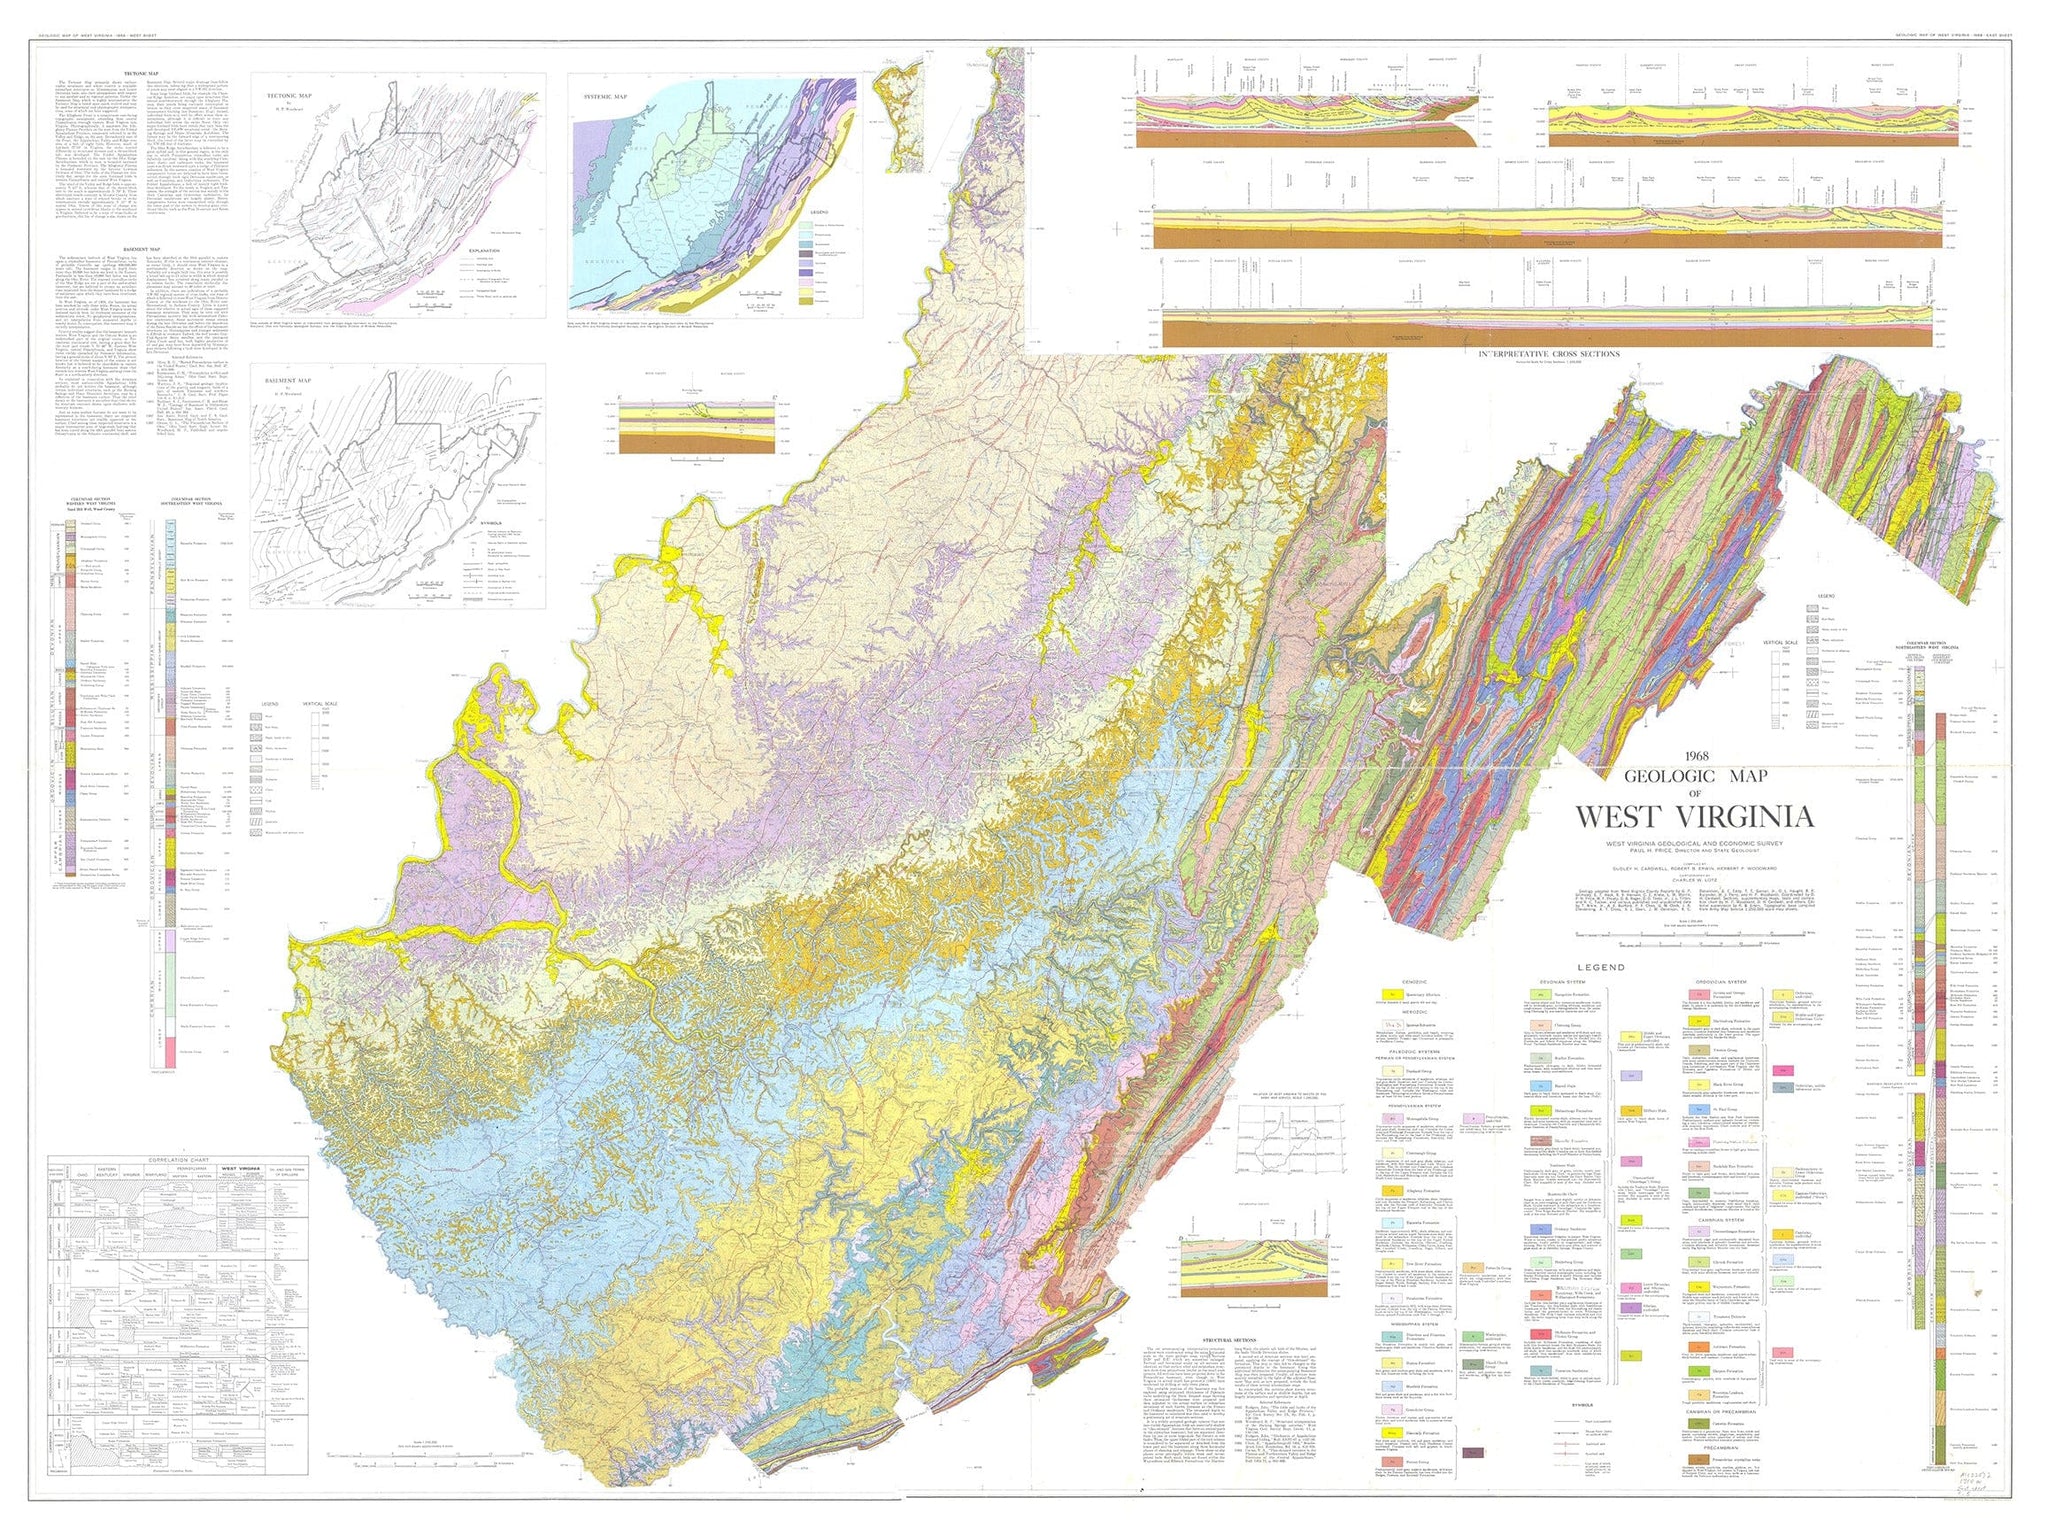 Wall Art: 1968 Geologic Map of West Virginia